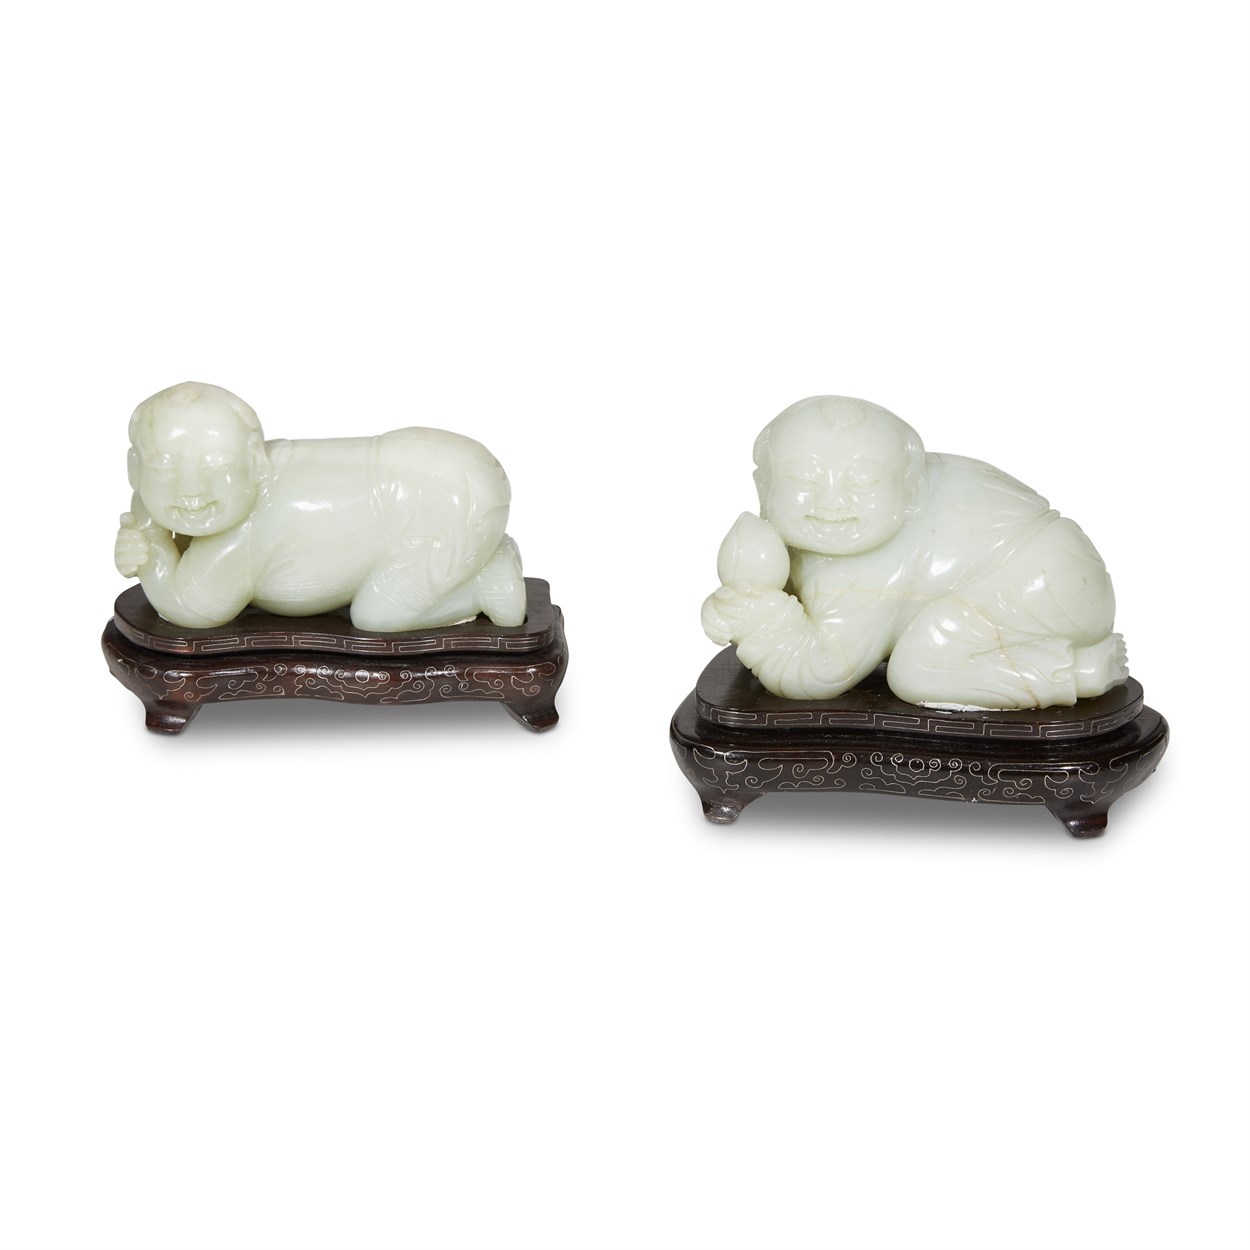 Lot 138 - Two similar pale celadon jade figures of kneeling boys